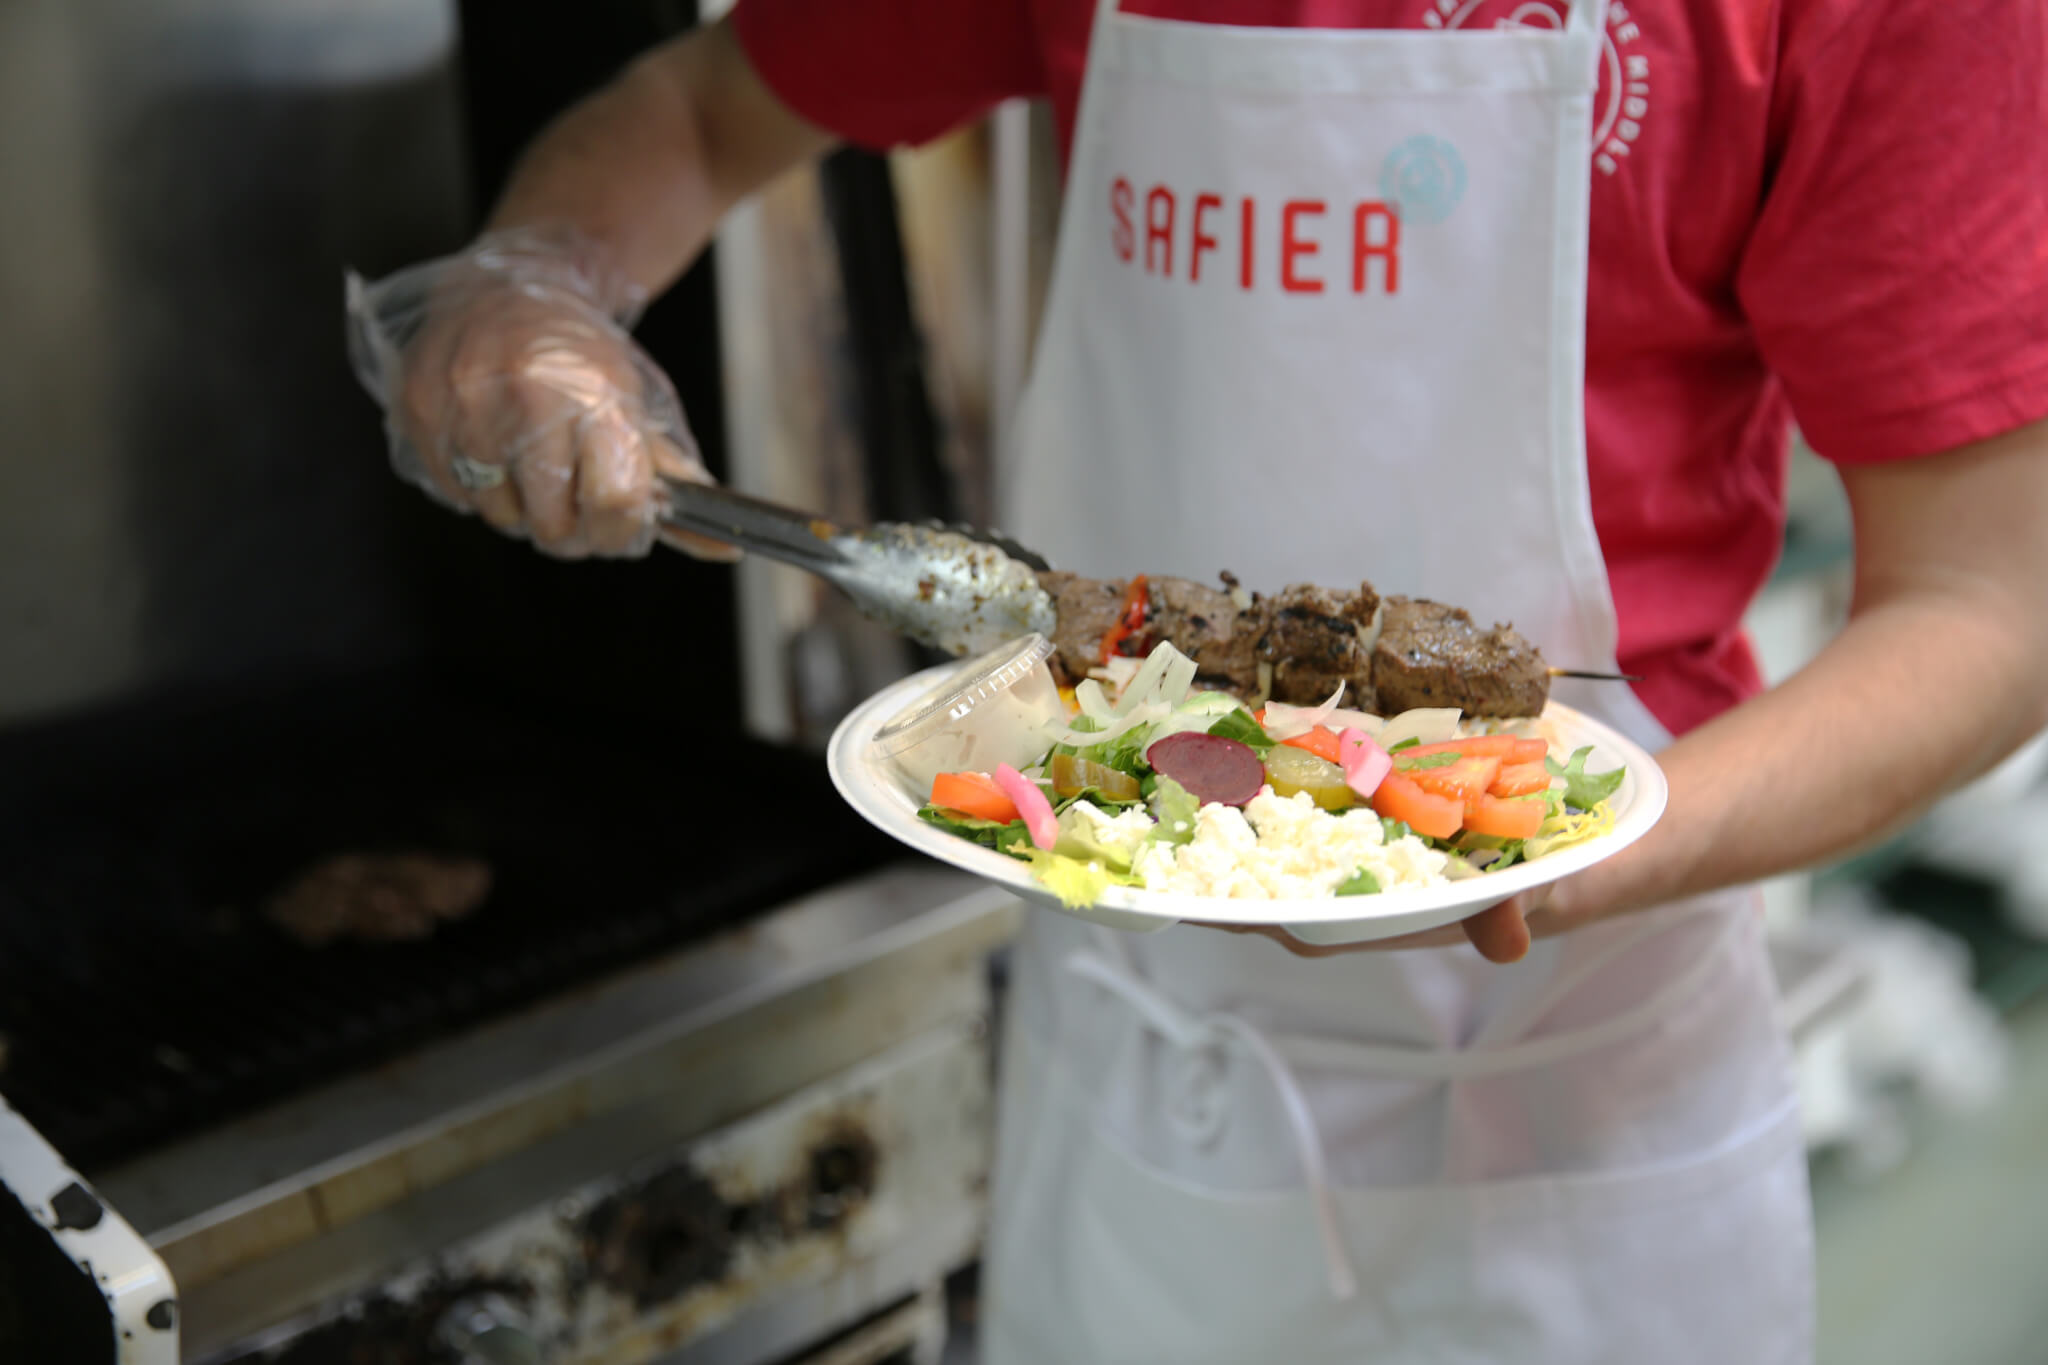 employee serving food in Safier apron